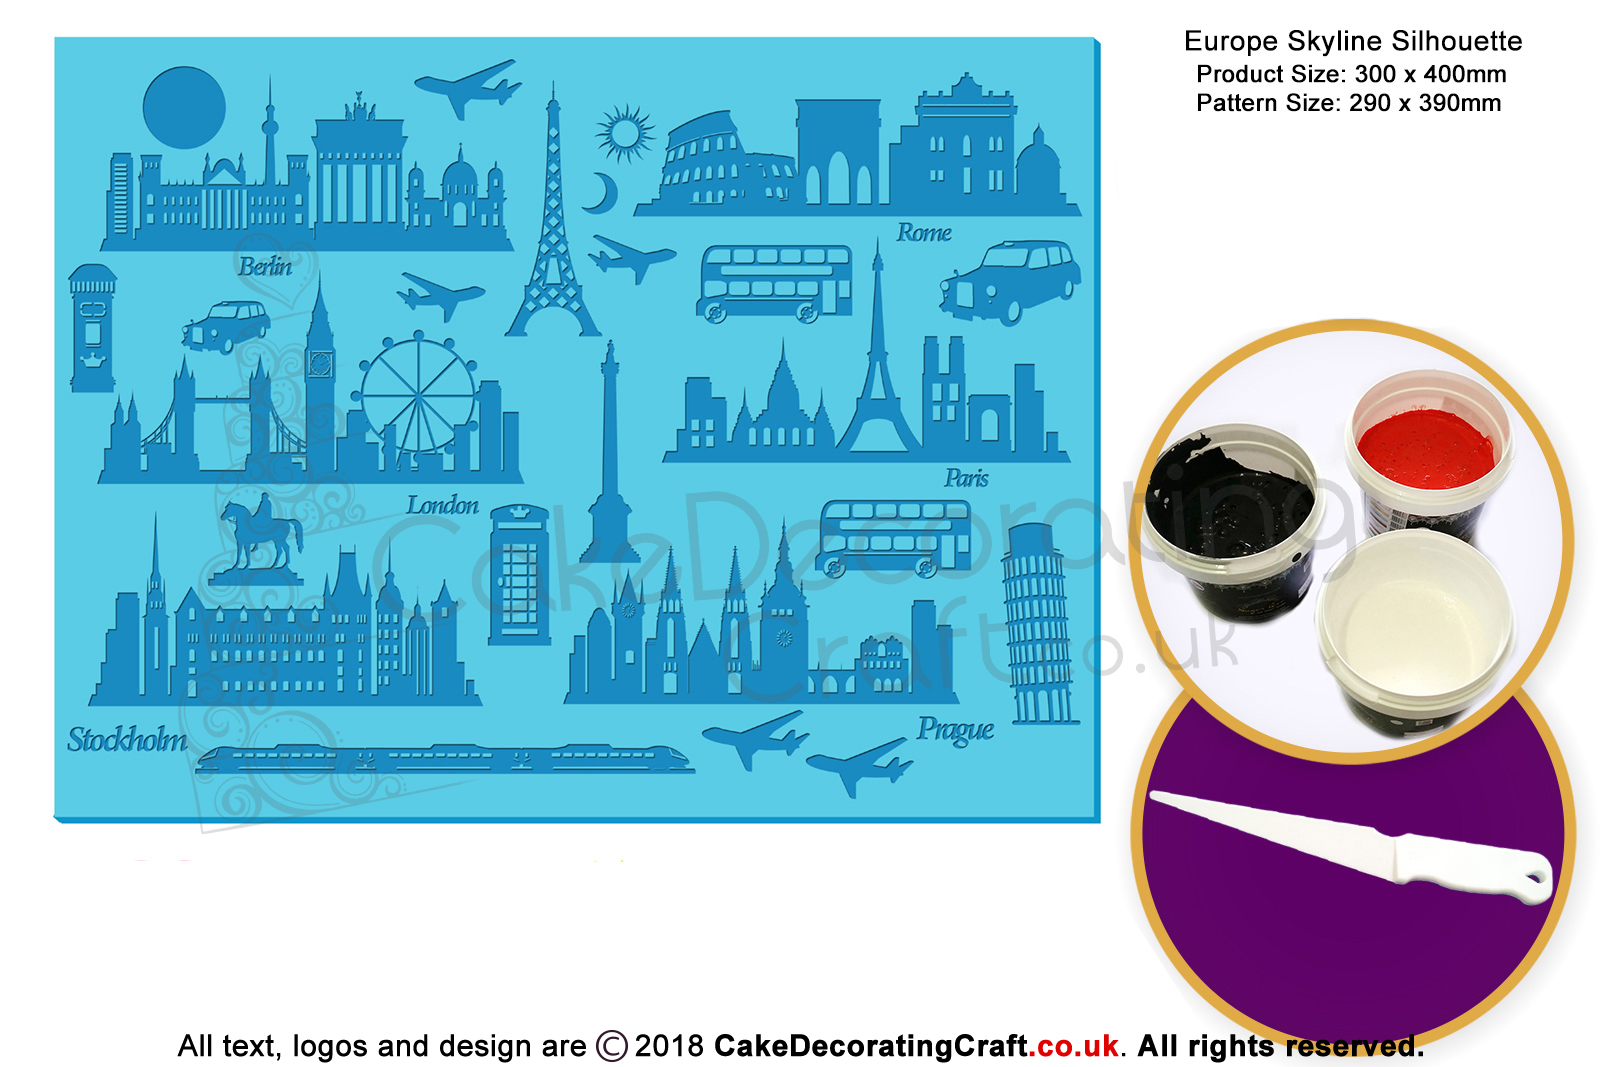 Europe Skyline | Silhouette Cake Design Starter Kits | Cupcake Cookies Cake Decorating Craft Tool